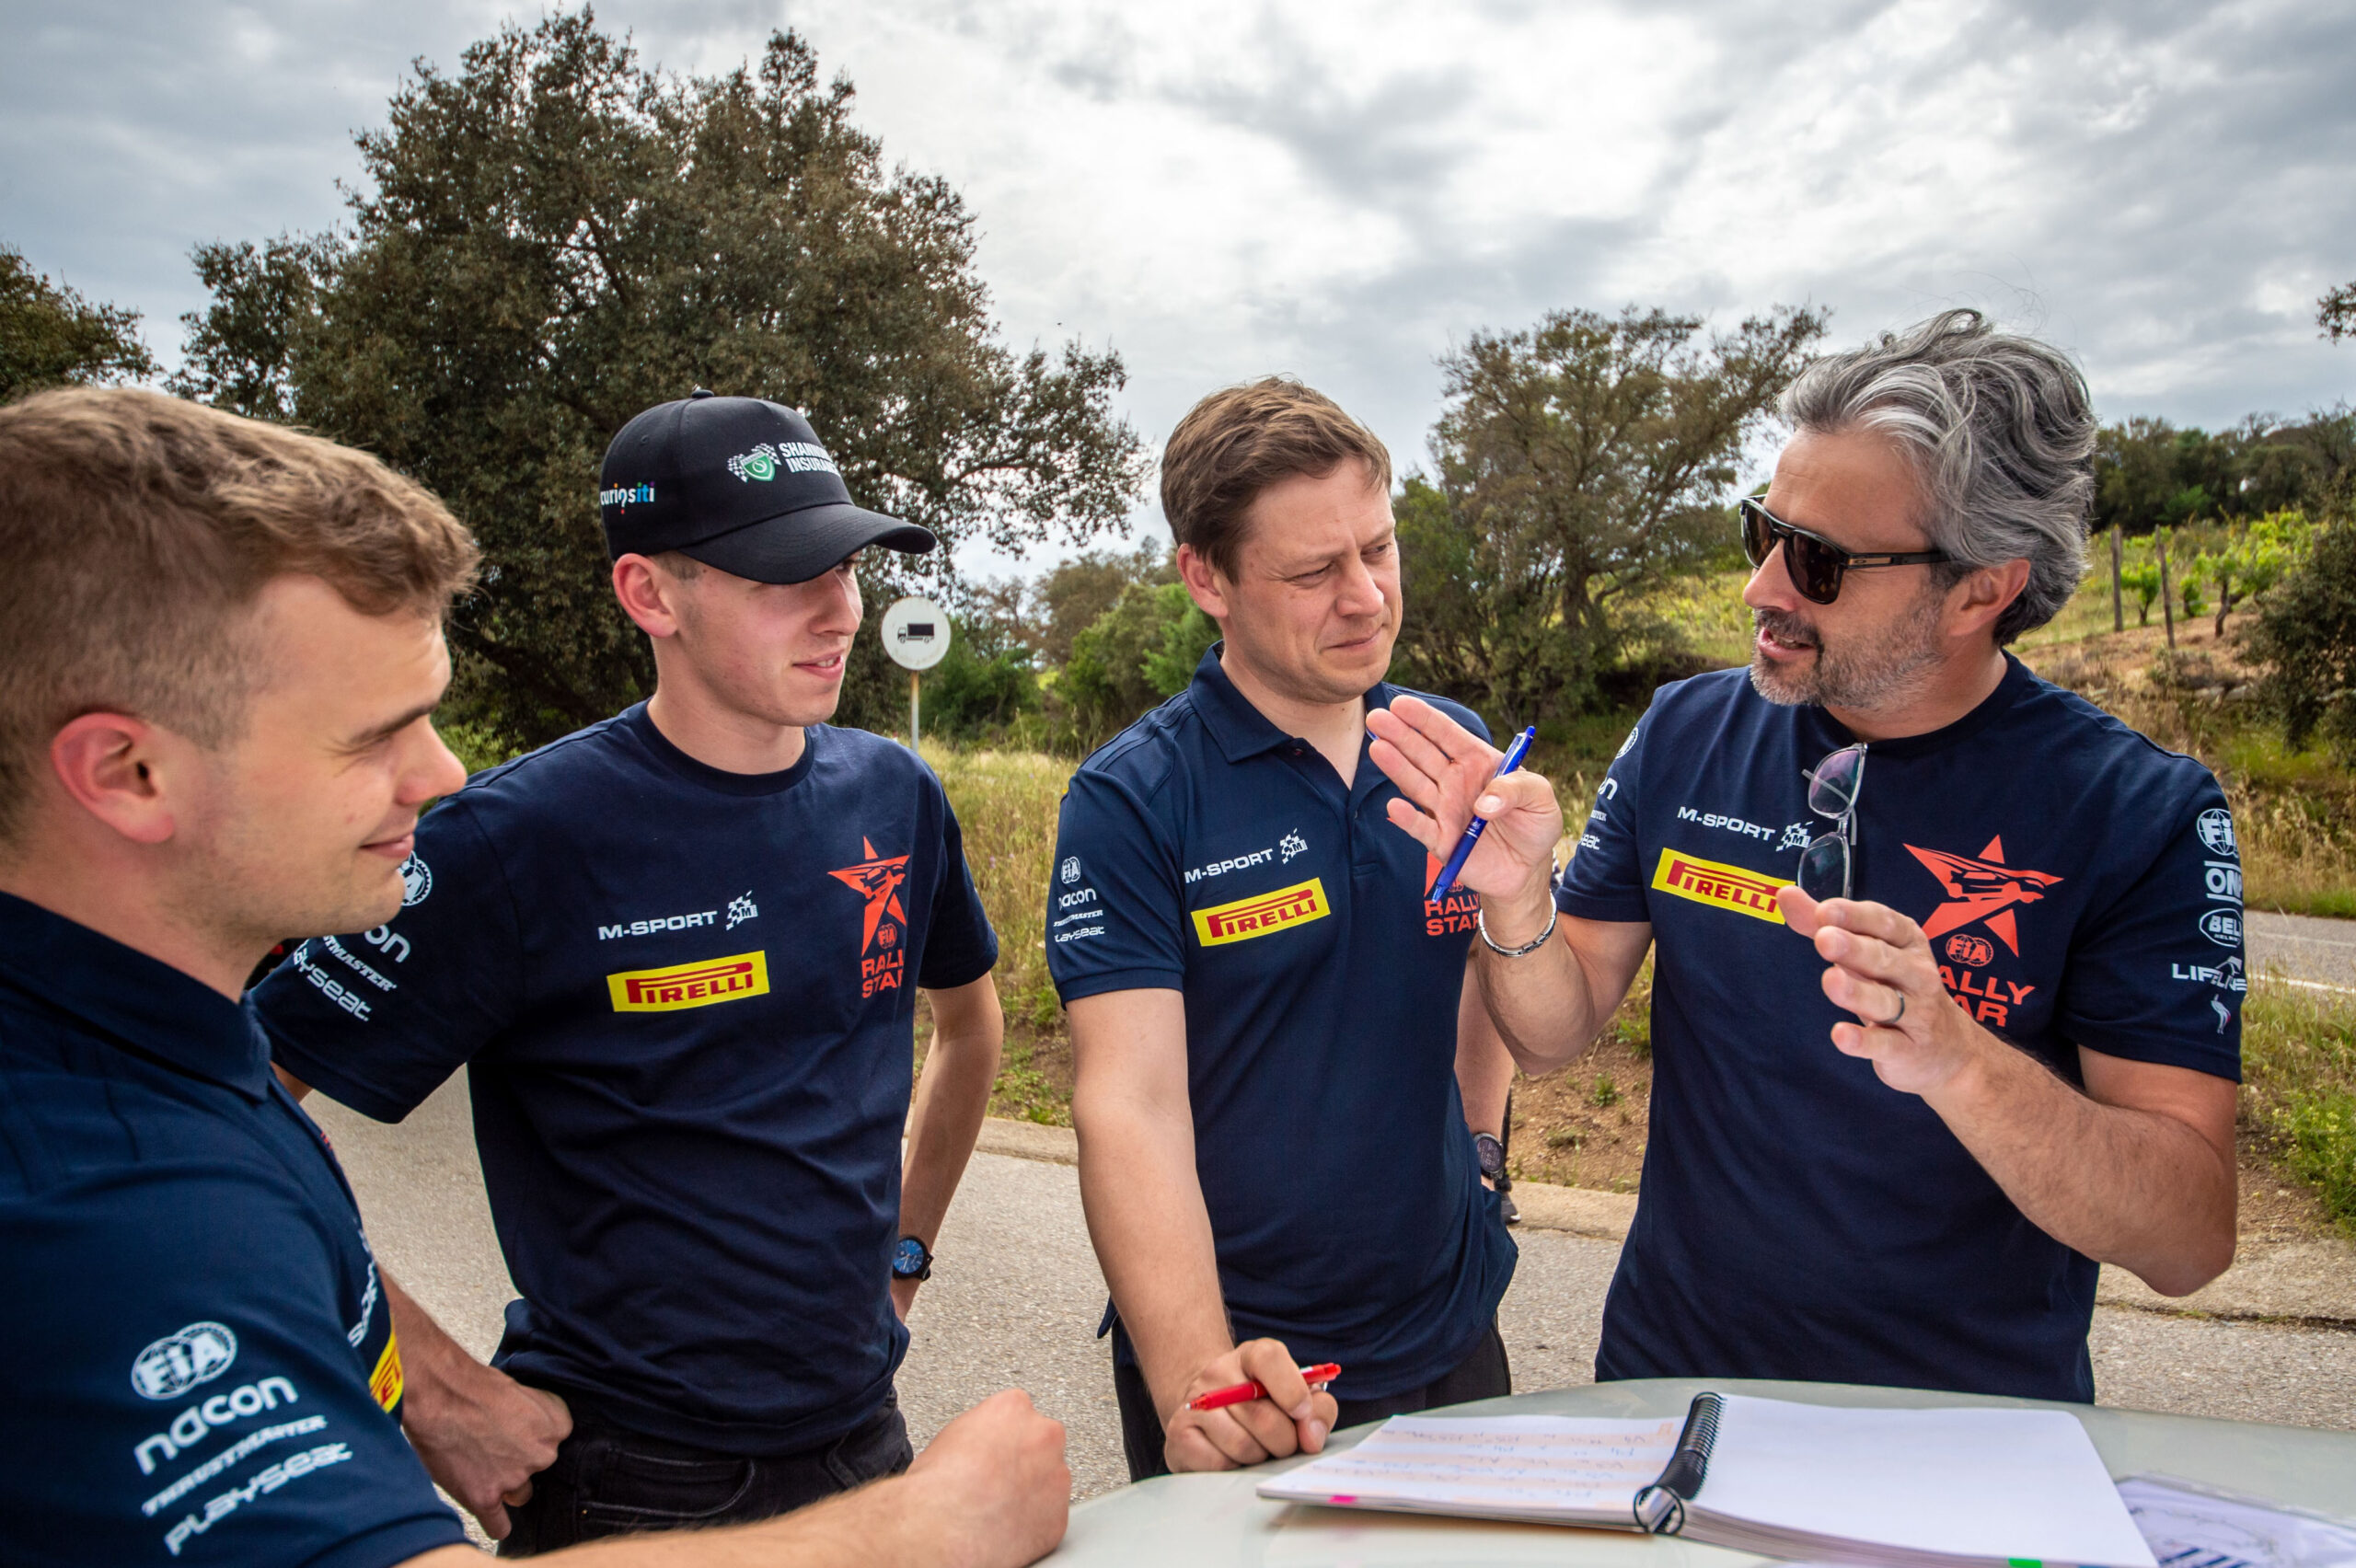 FIA Rally Star training camp - Romet Jurgensen, Taylor Gill, Romet's codriver Sim and codriver instructor Nicolas Klinger 